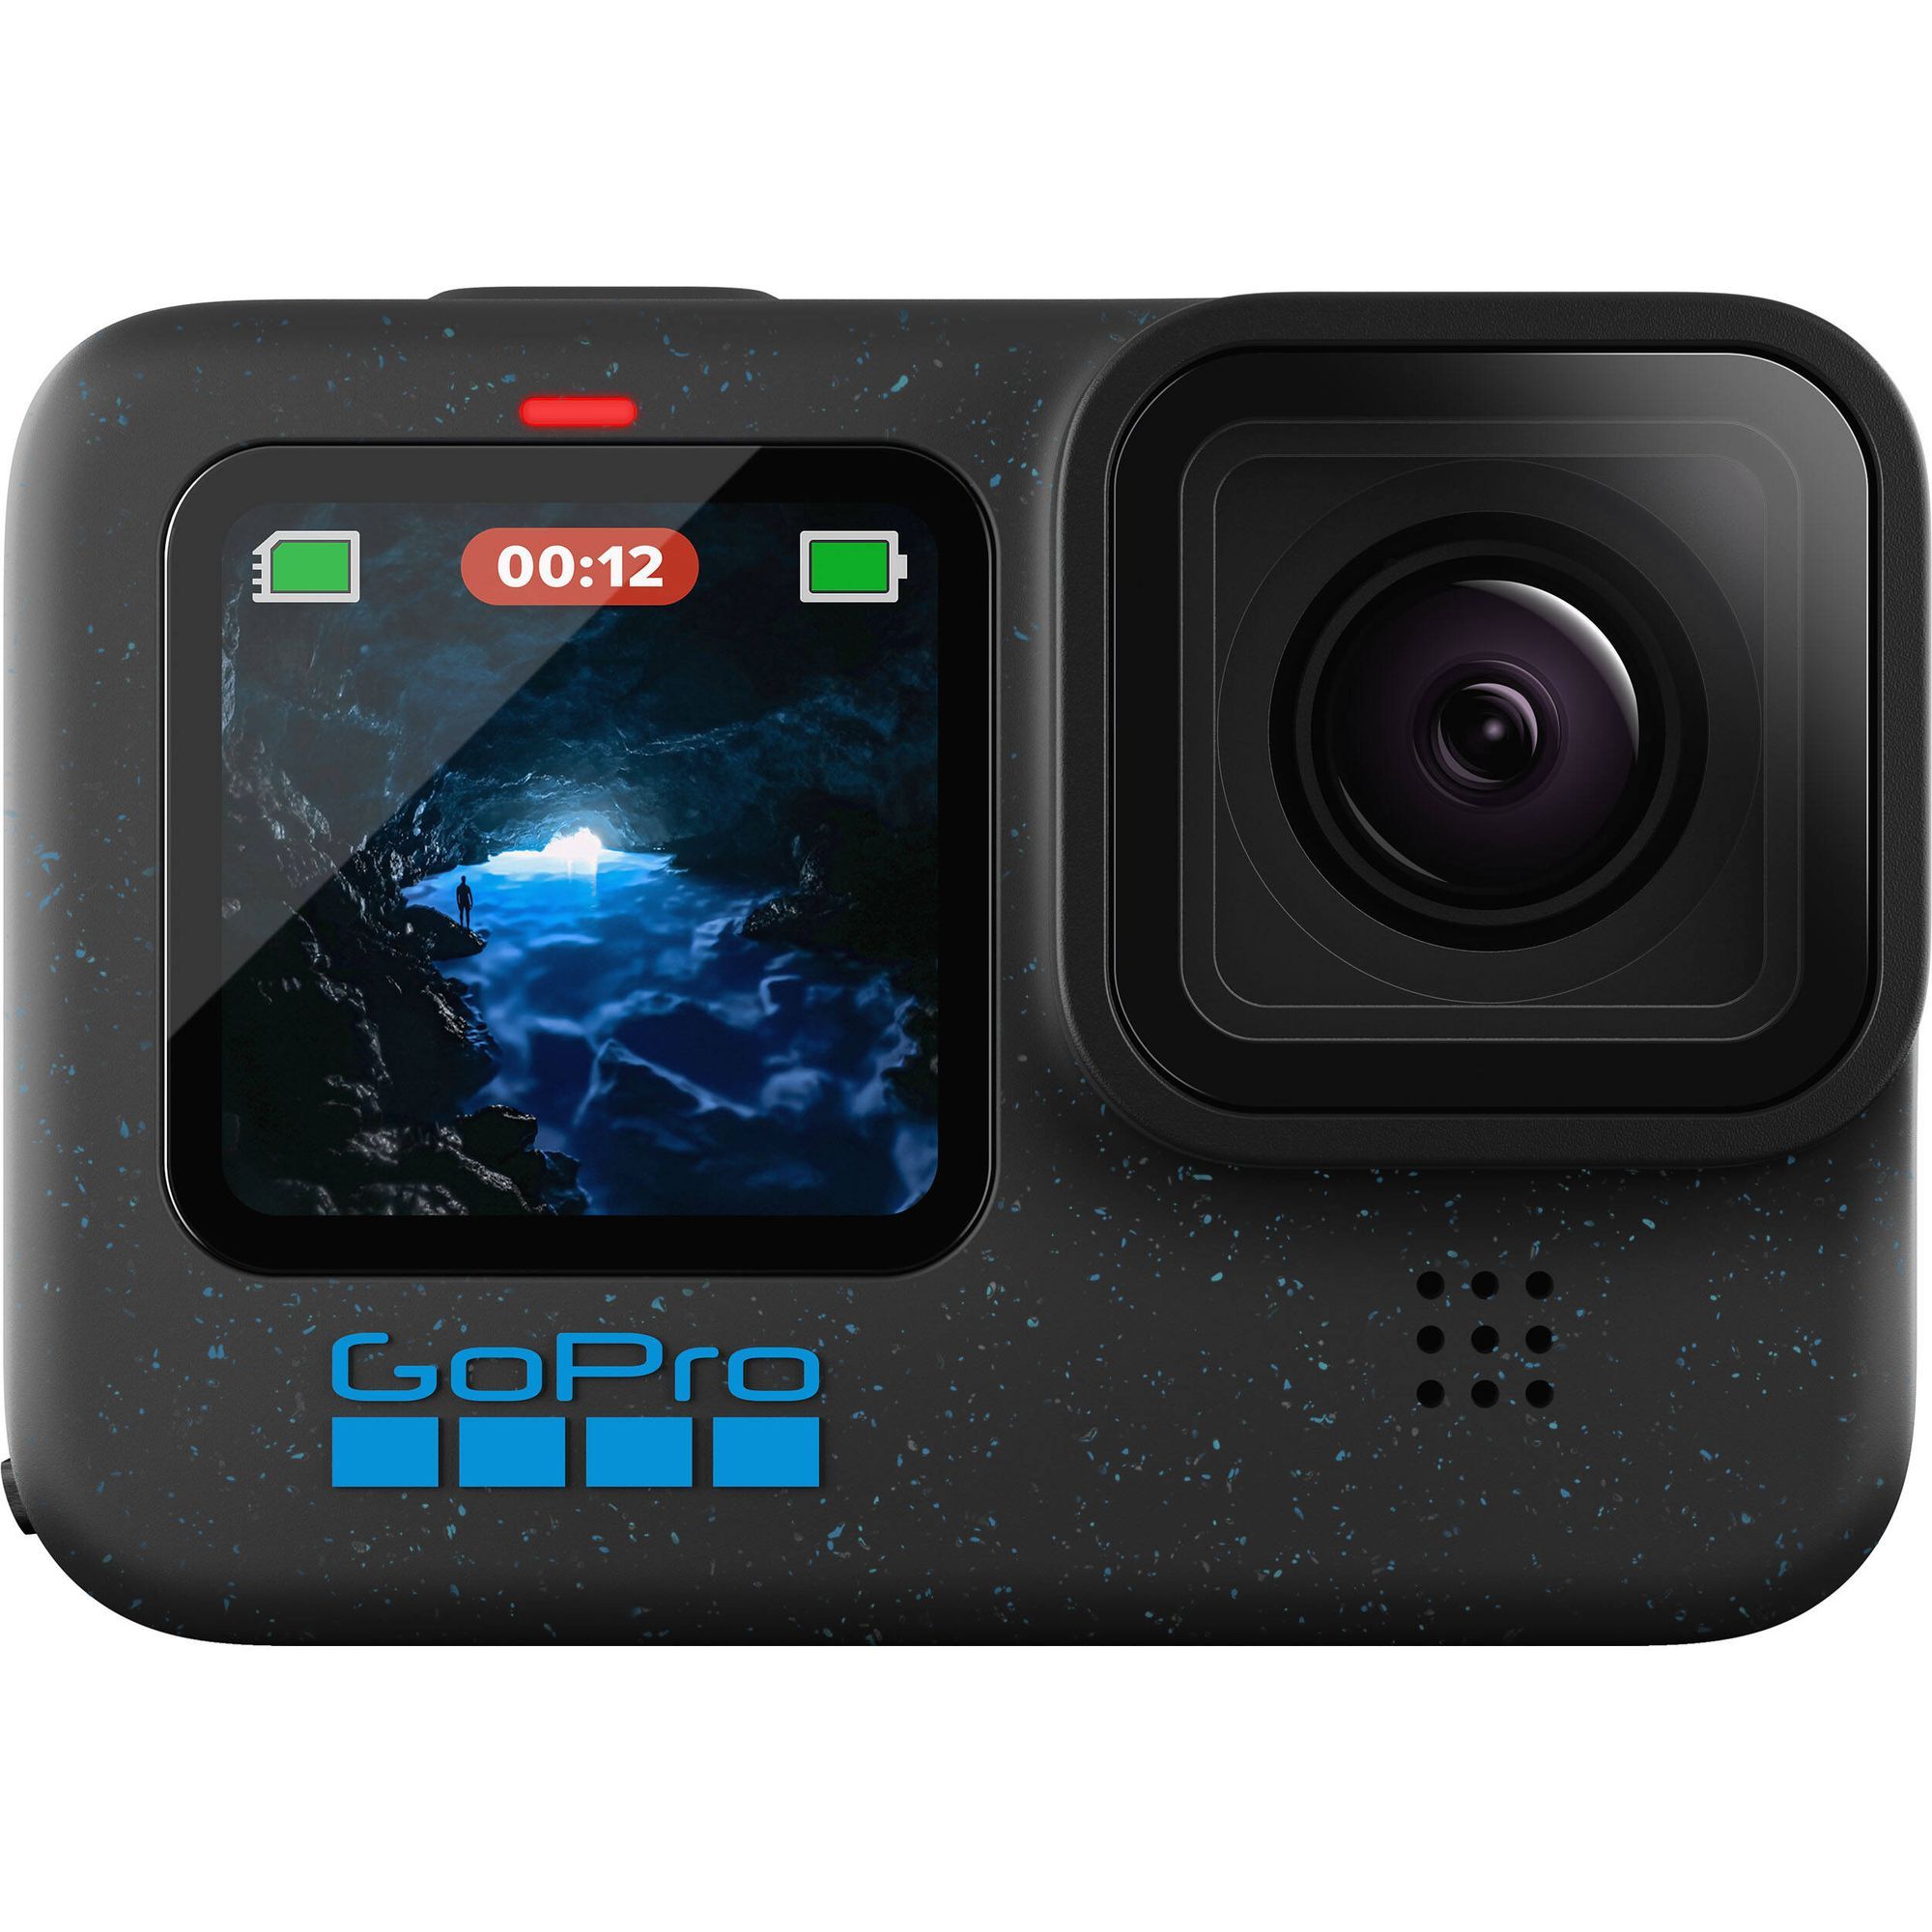 Экшн-камера GoPro Hero 12 Black Edition (CHDHX-121-RW)